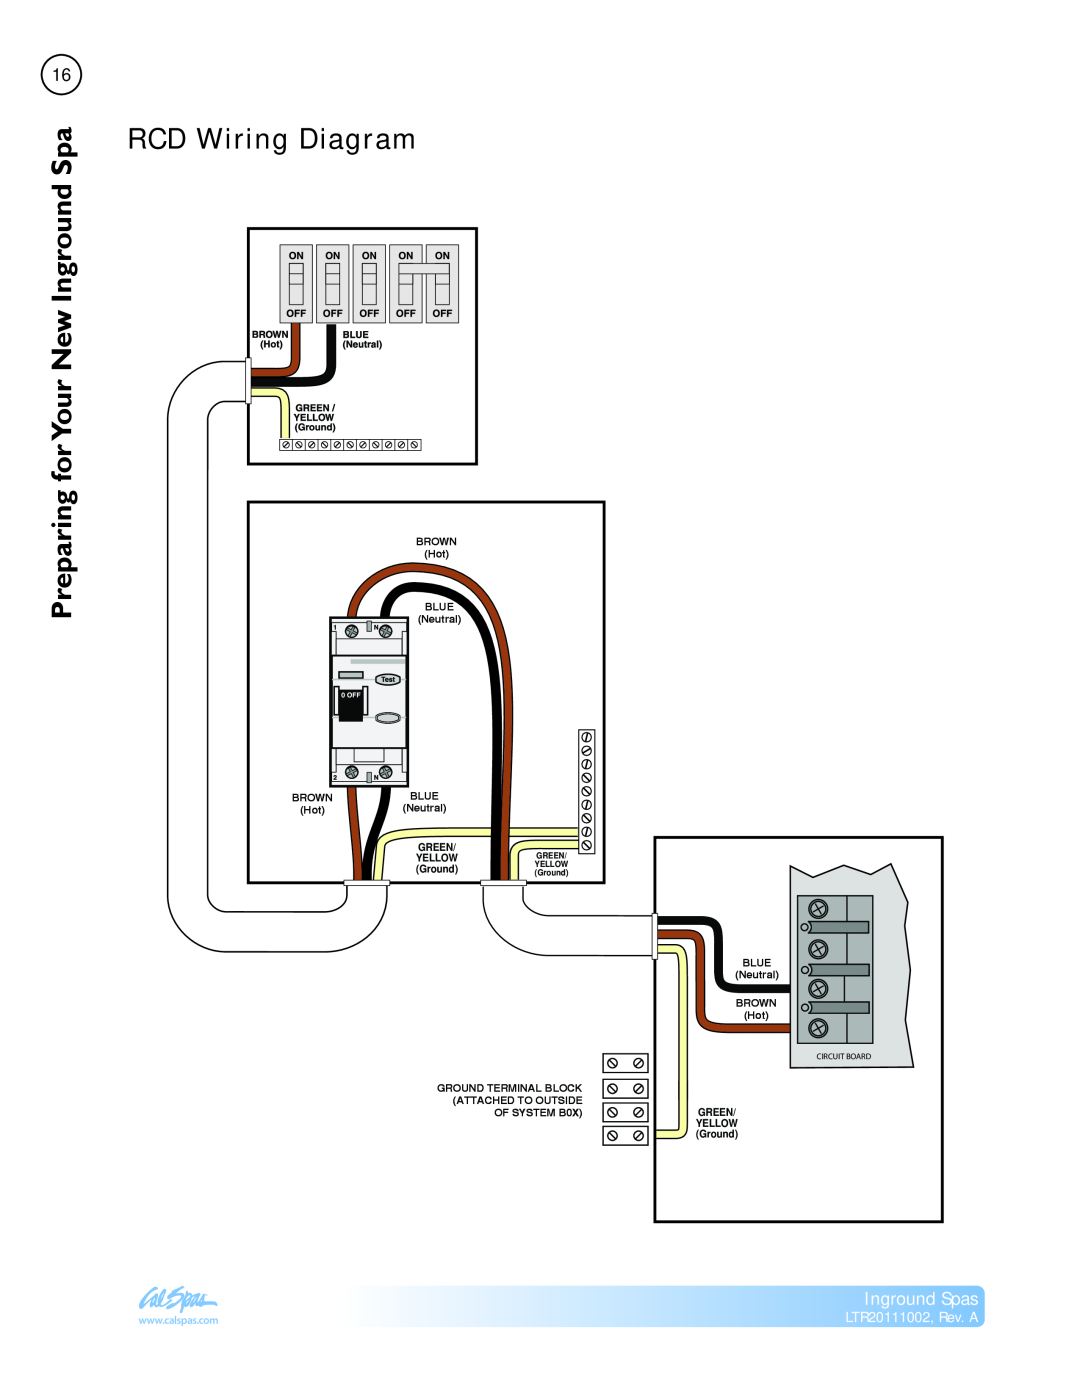 Cal Spas manual NewYour SpaInground, RCD Wiring Diagram, forPreparing, Inground Spas, LTR20111002, Rev. A 